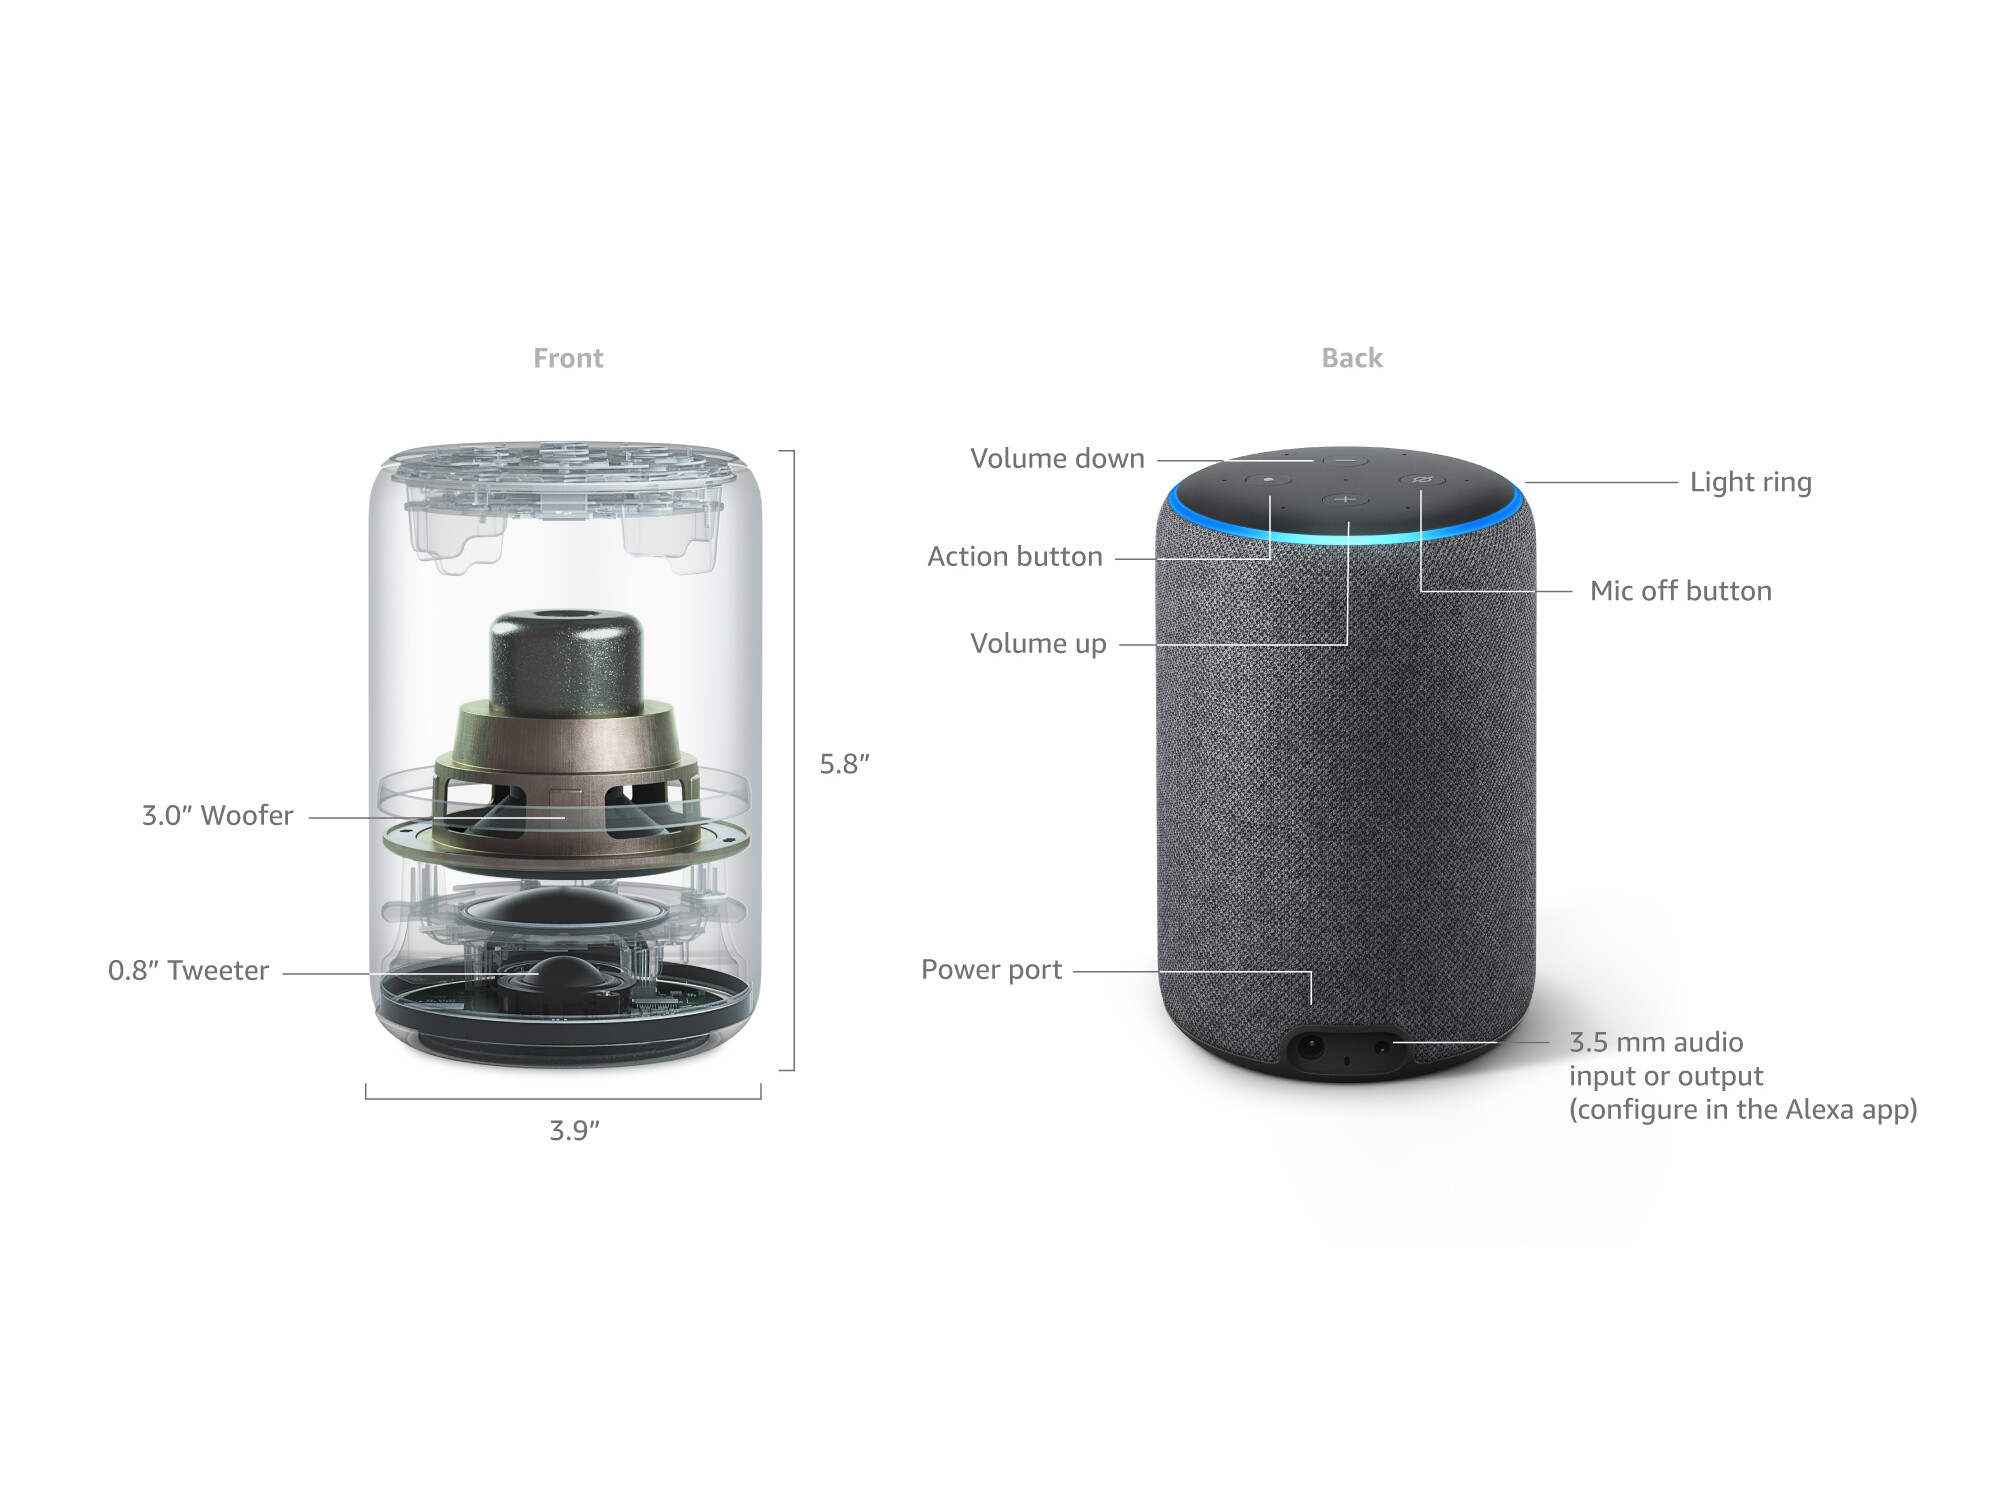 Echo Dot (3rd Gen) - Smart speaker with Alexa - Charcoal Fabric